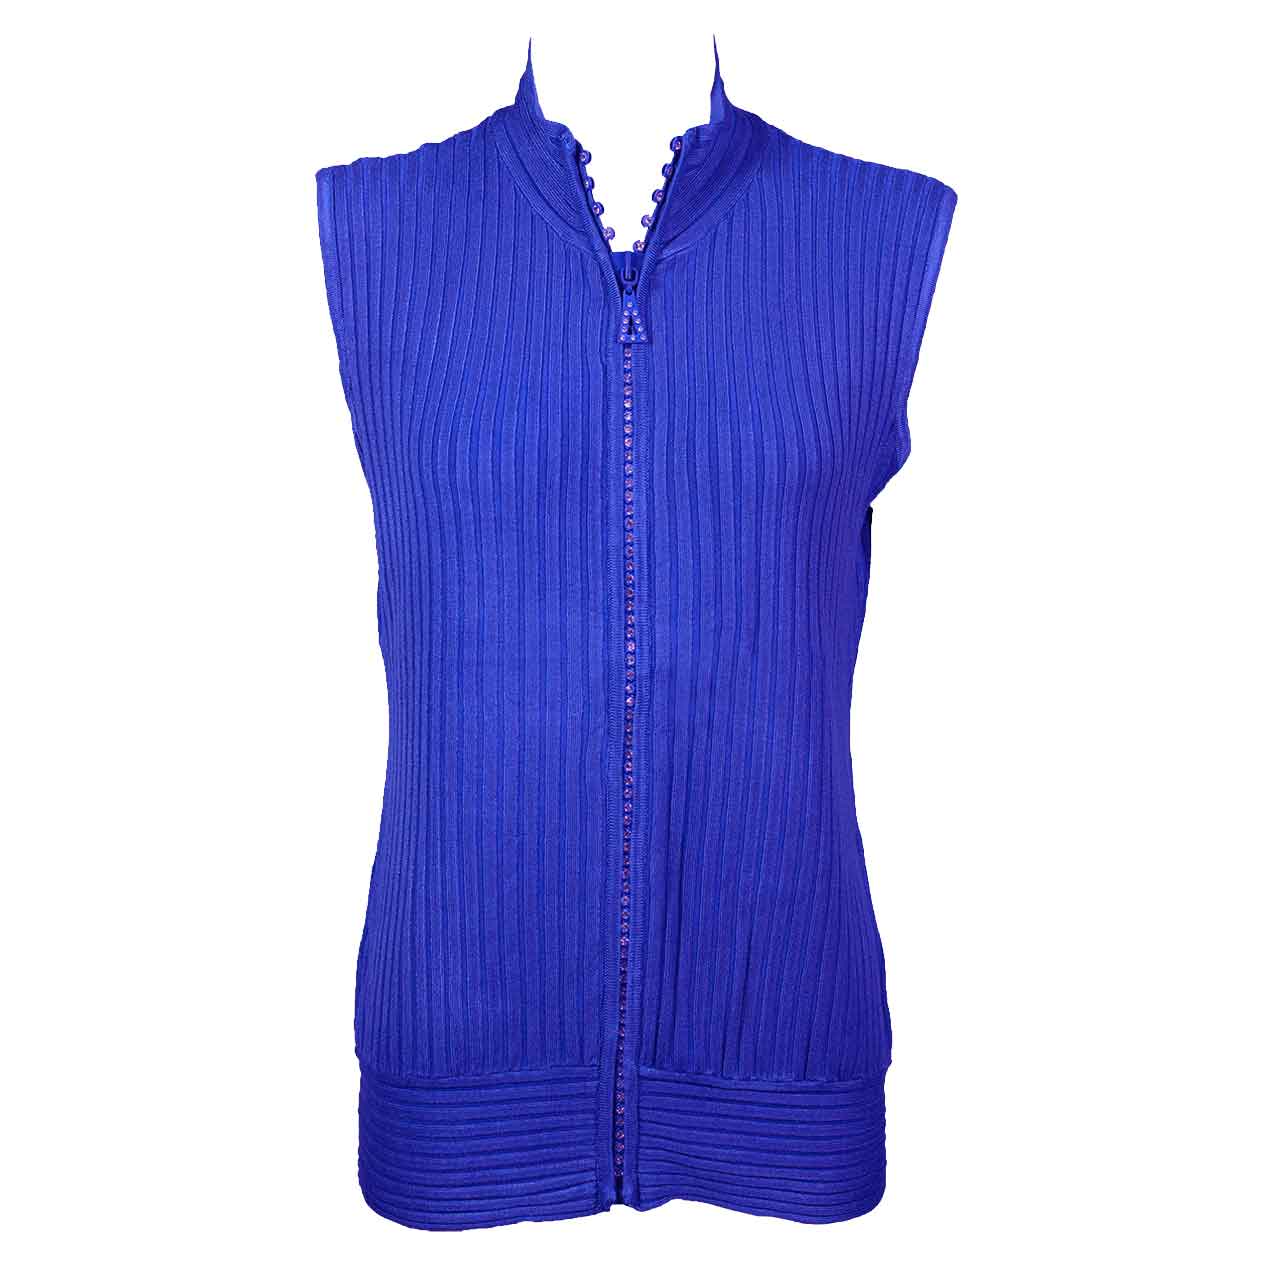 1595 - Royal Blue<br>
Crystal Zipper Sweater Vest